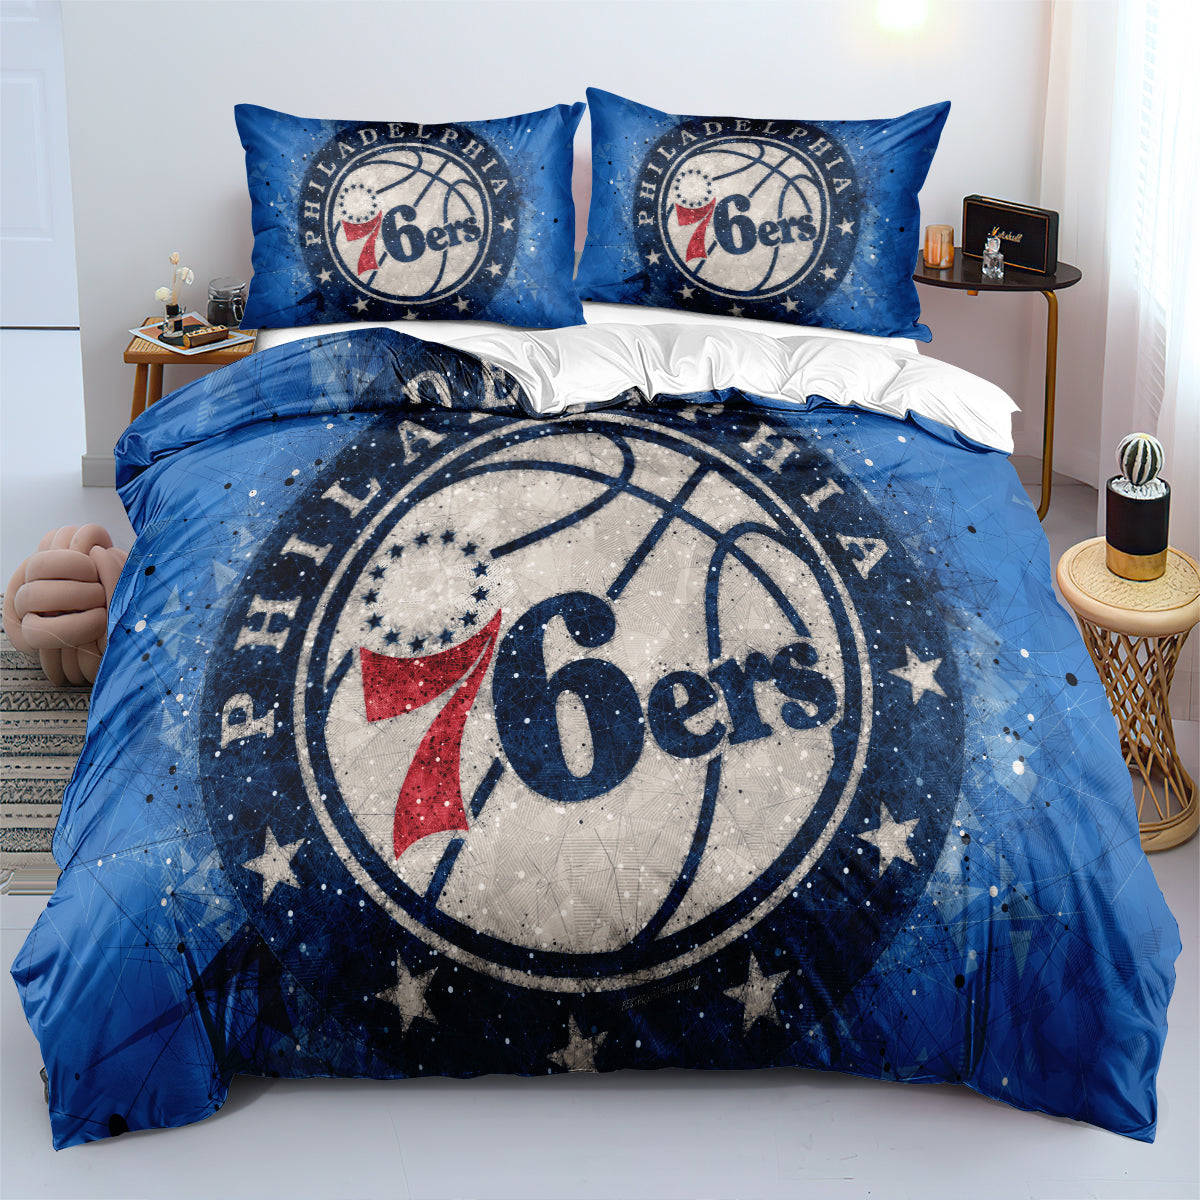 Philadelphia Basketball 76ers Bedding Set Quilt Cover Without Filler